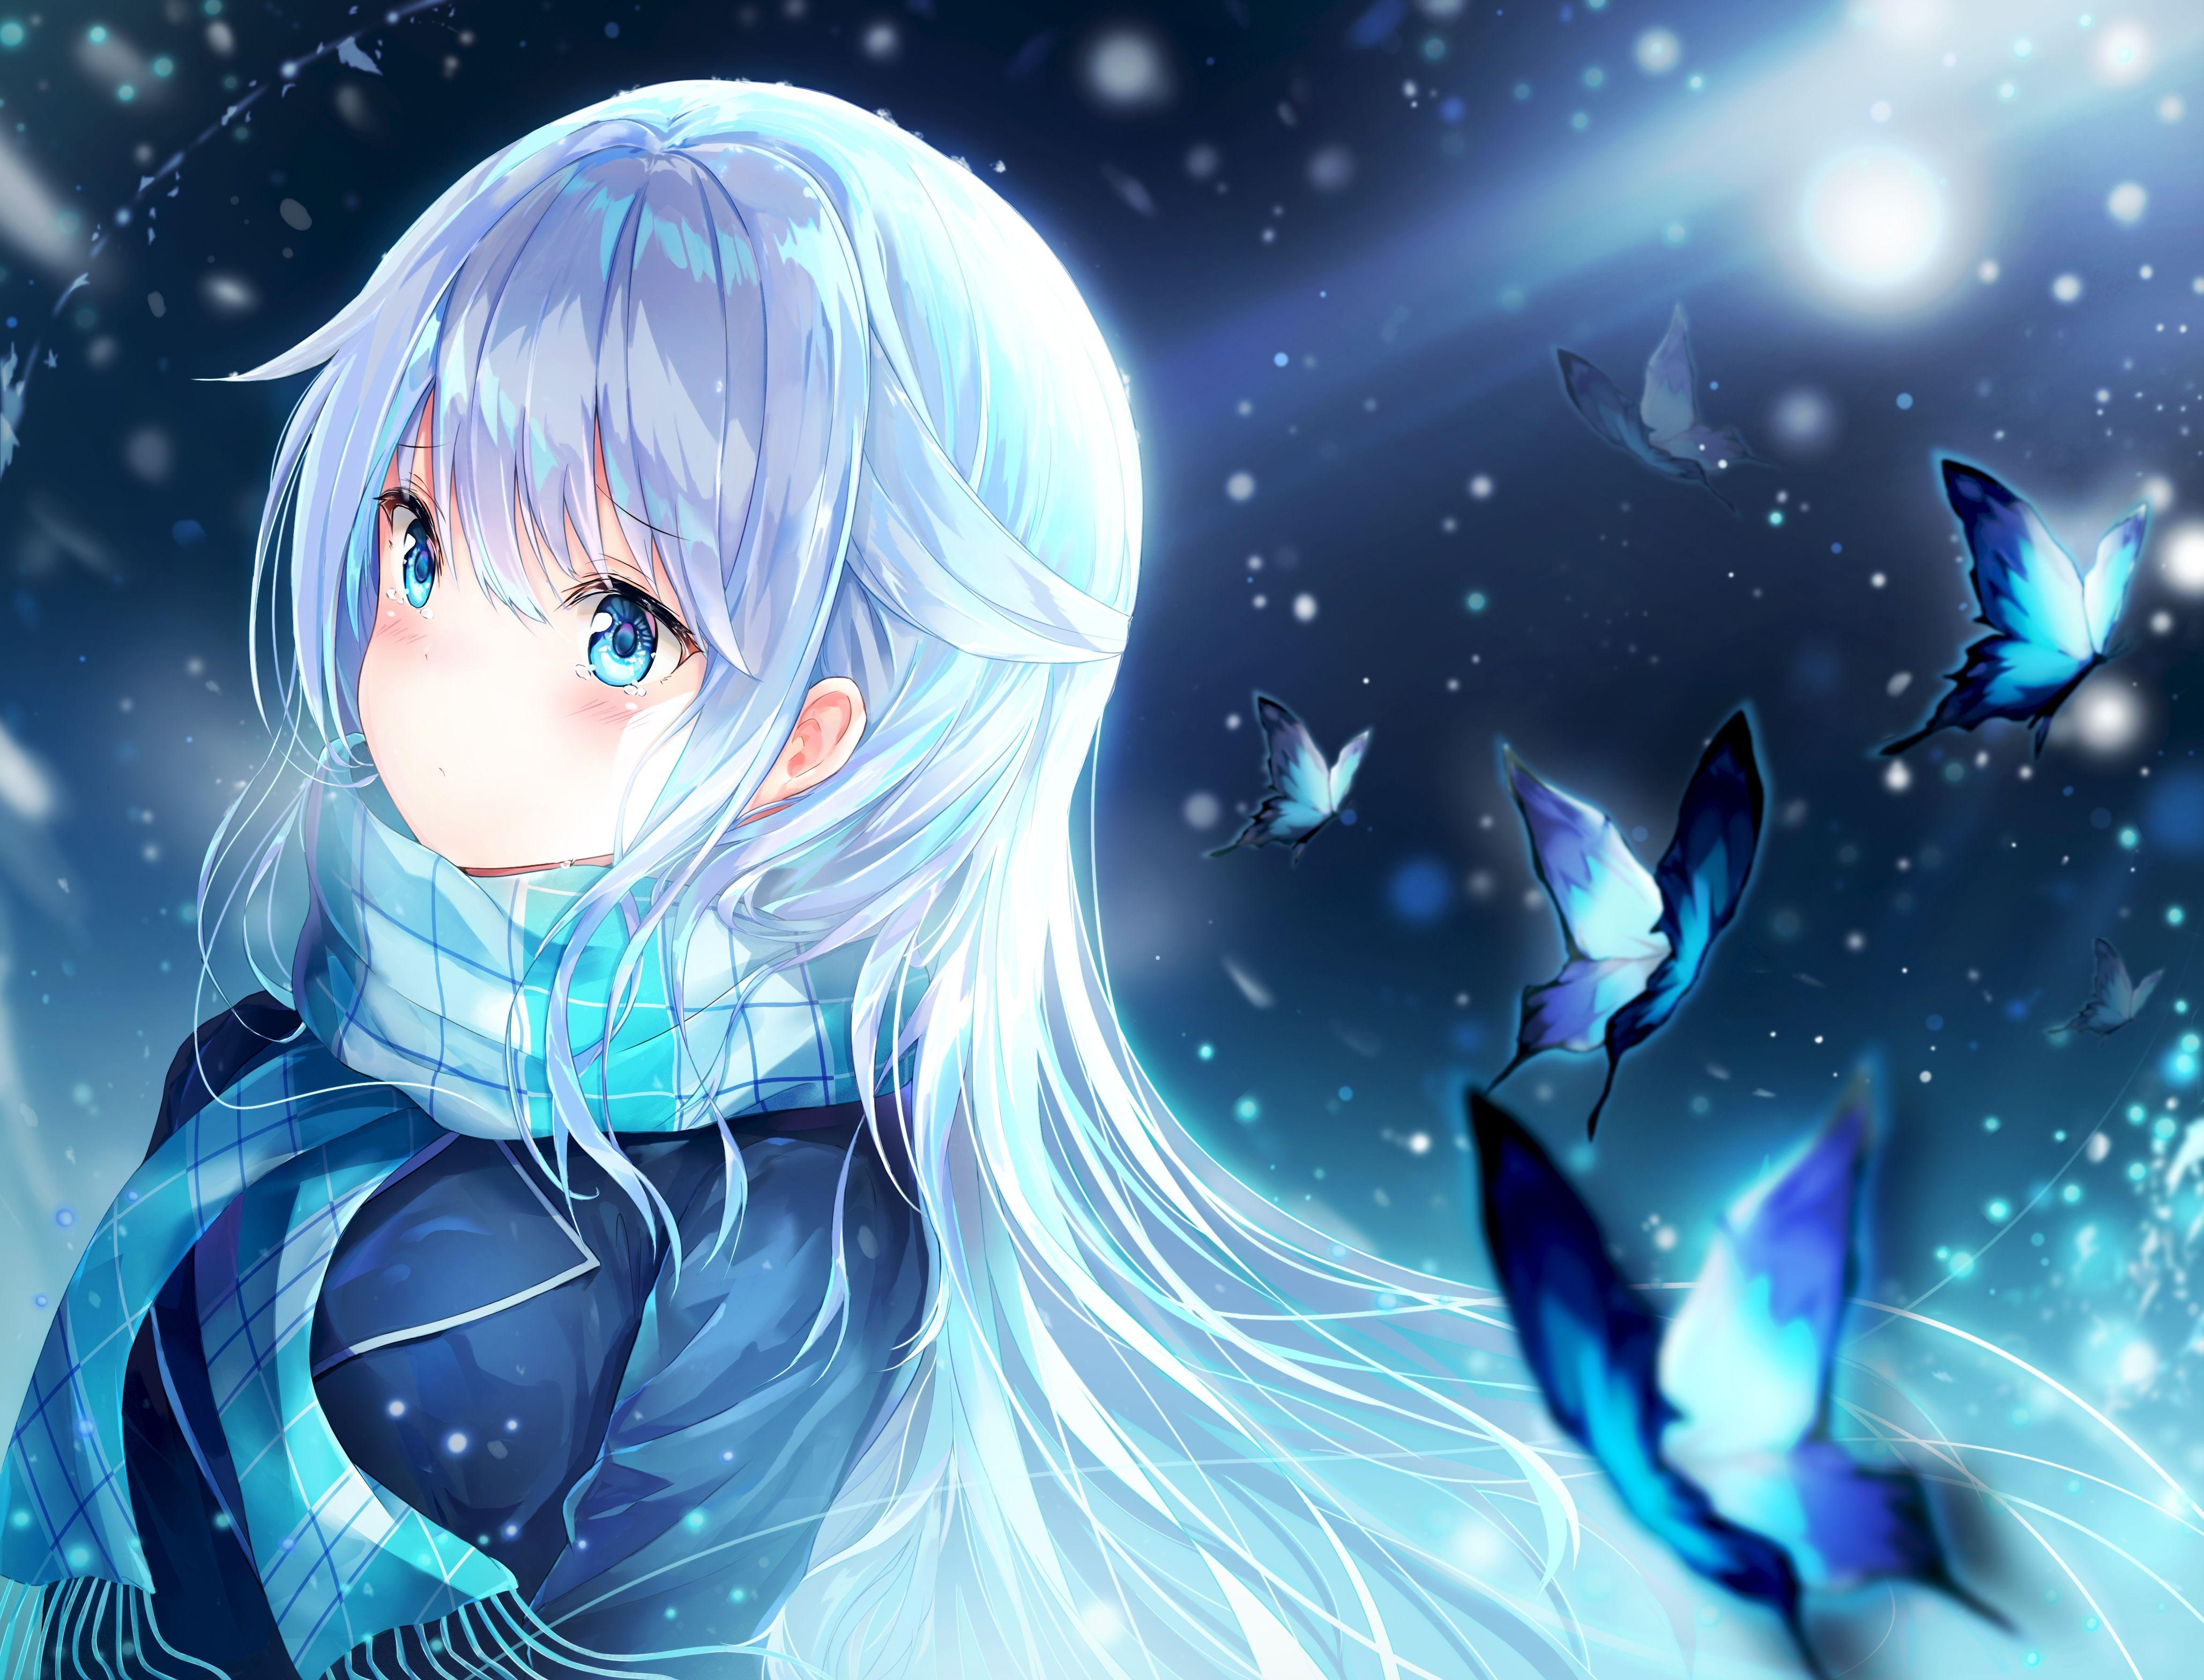 Butterfly Blue Hair Anime Girl - wide 6